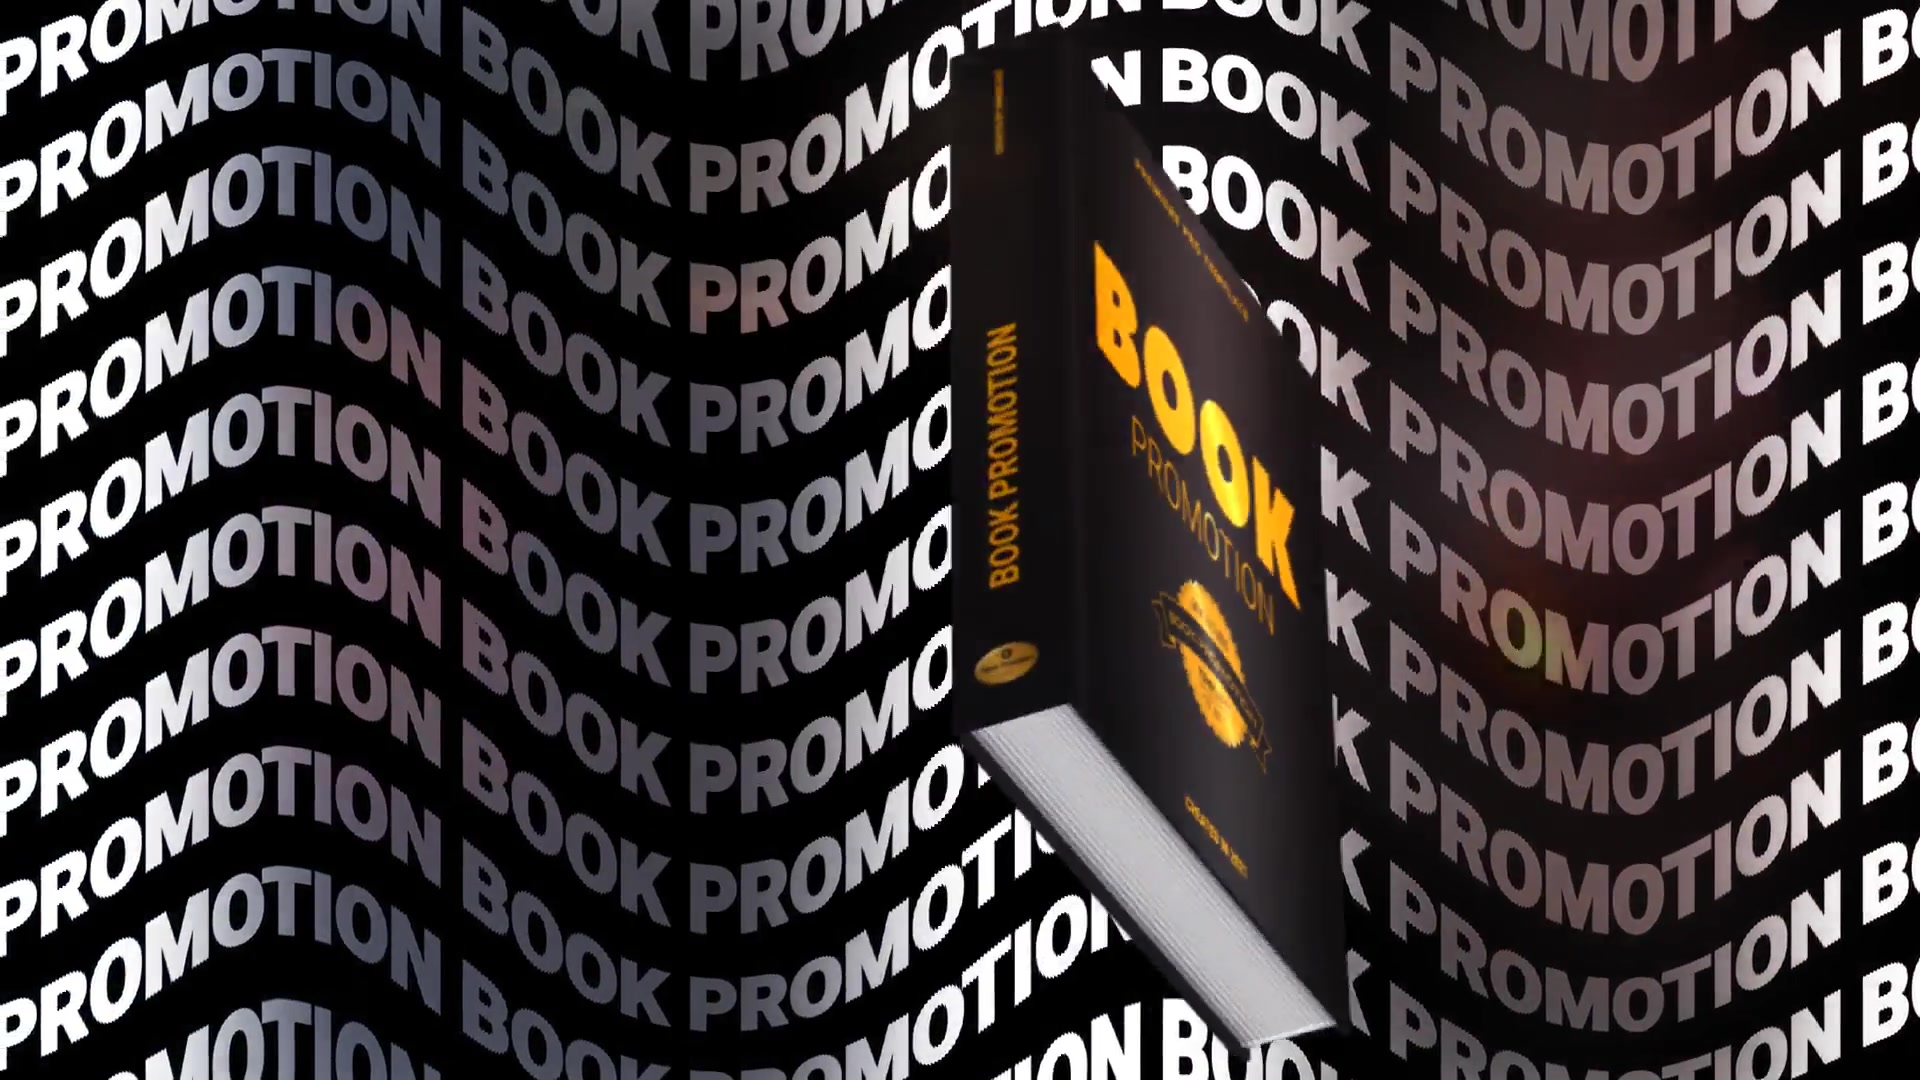 Modern Book Promotion For Premiere Pro Videohive 33746622 Premiere Pro Image 4